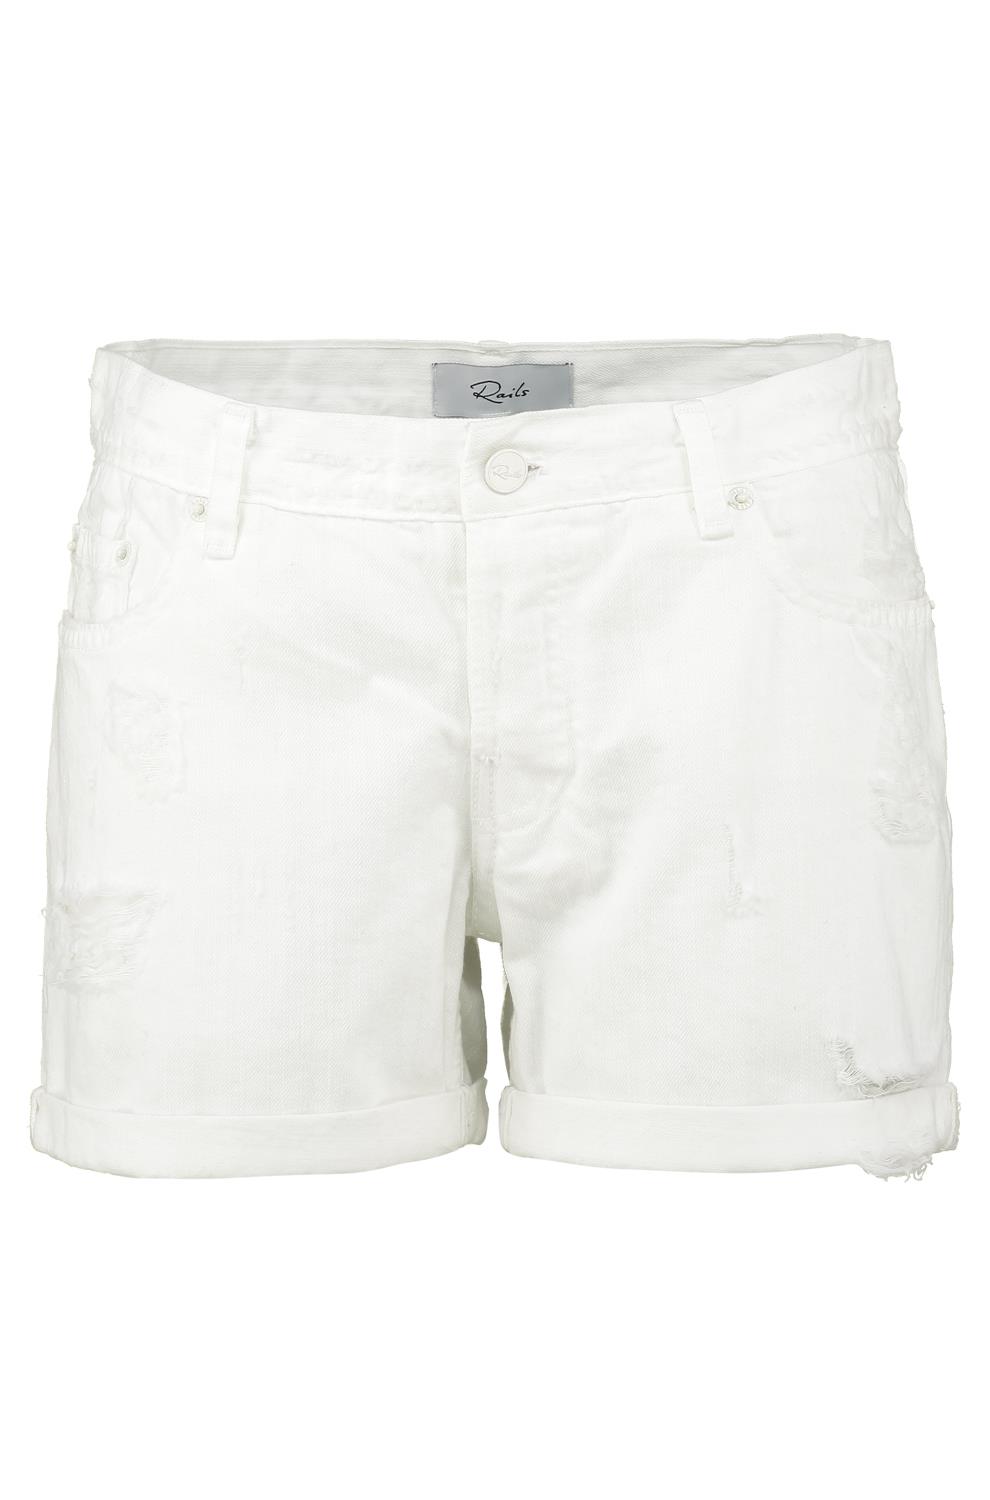 white shorts logan denim shorts in white image ... sbwzylp